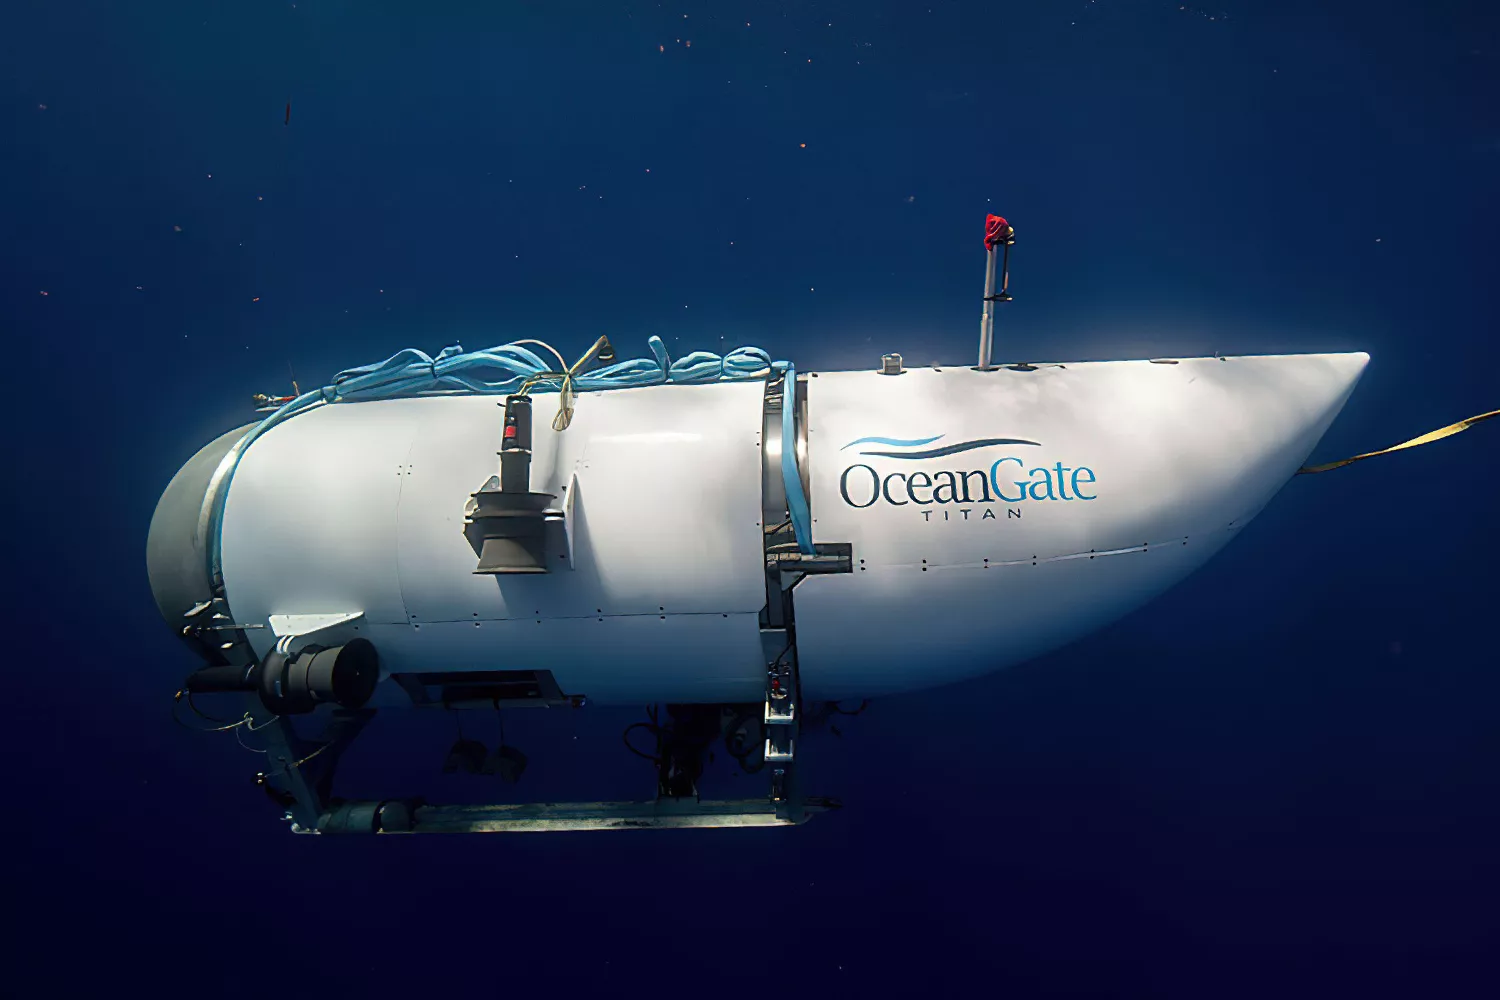 Oceangate submersible Titan. ALAMY STOCK PHOTO